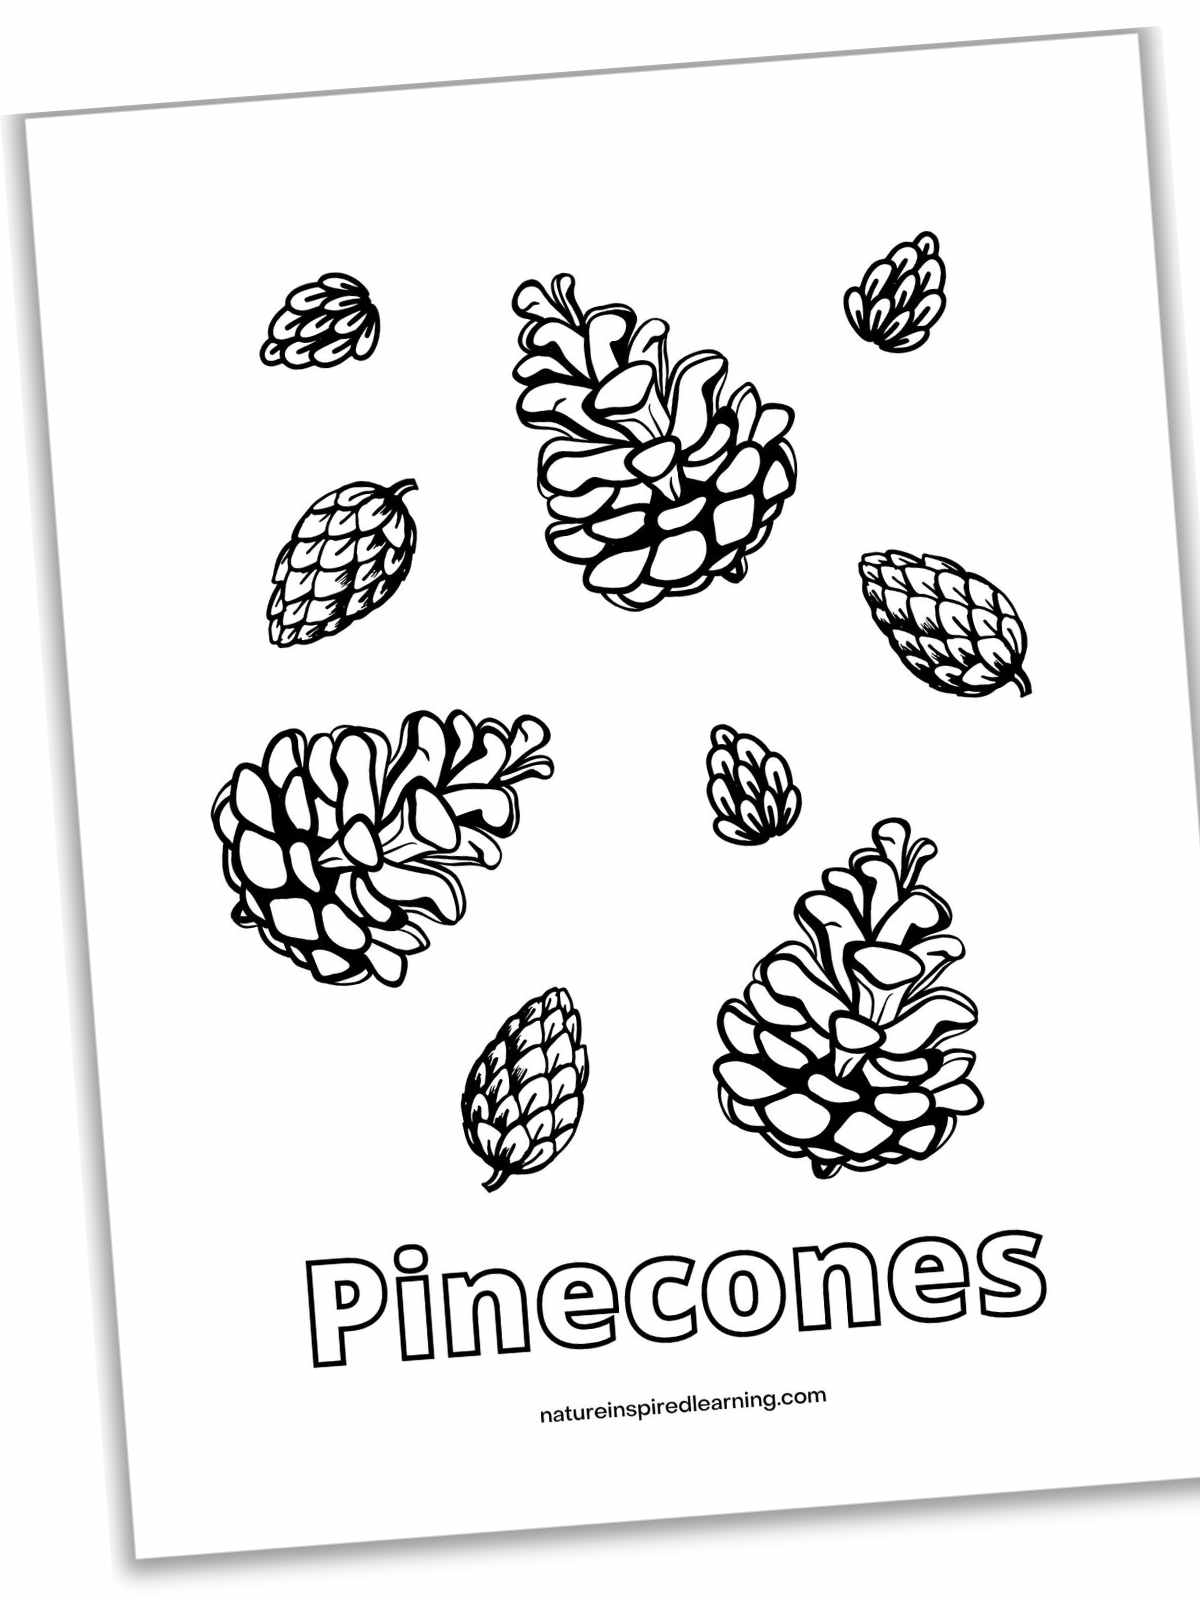 printable with three different types of pinecones arranged randomly